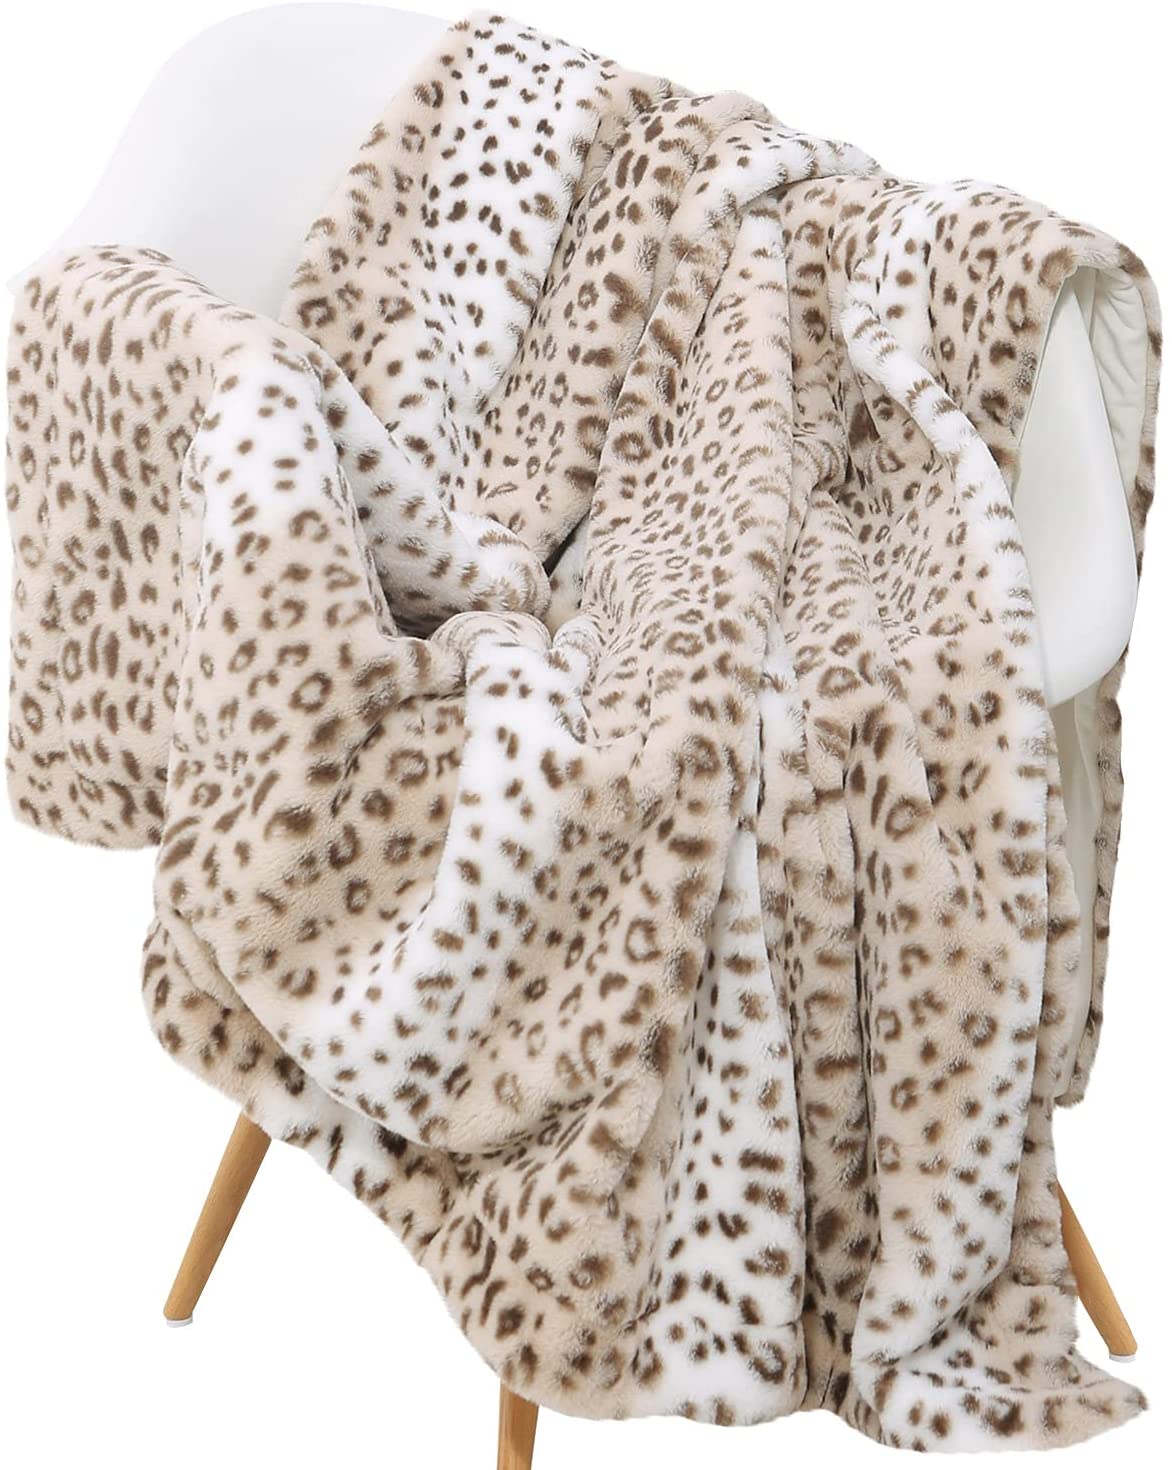 Sedona House Microfiber Leopard Print Blanket, 60-Inch x 70-Inch